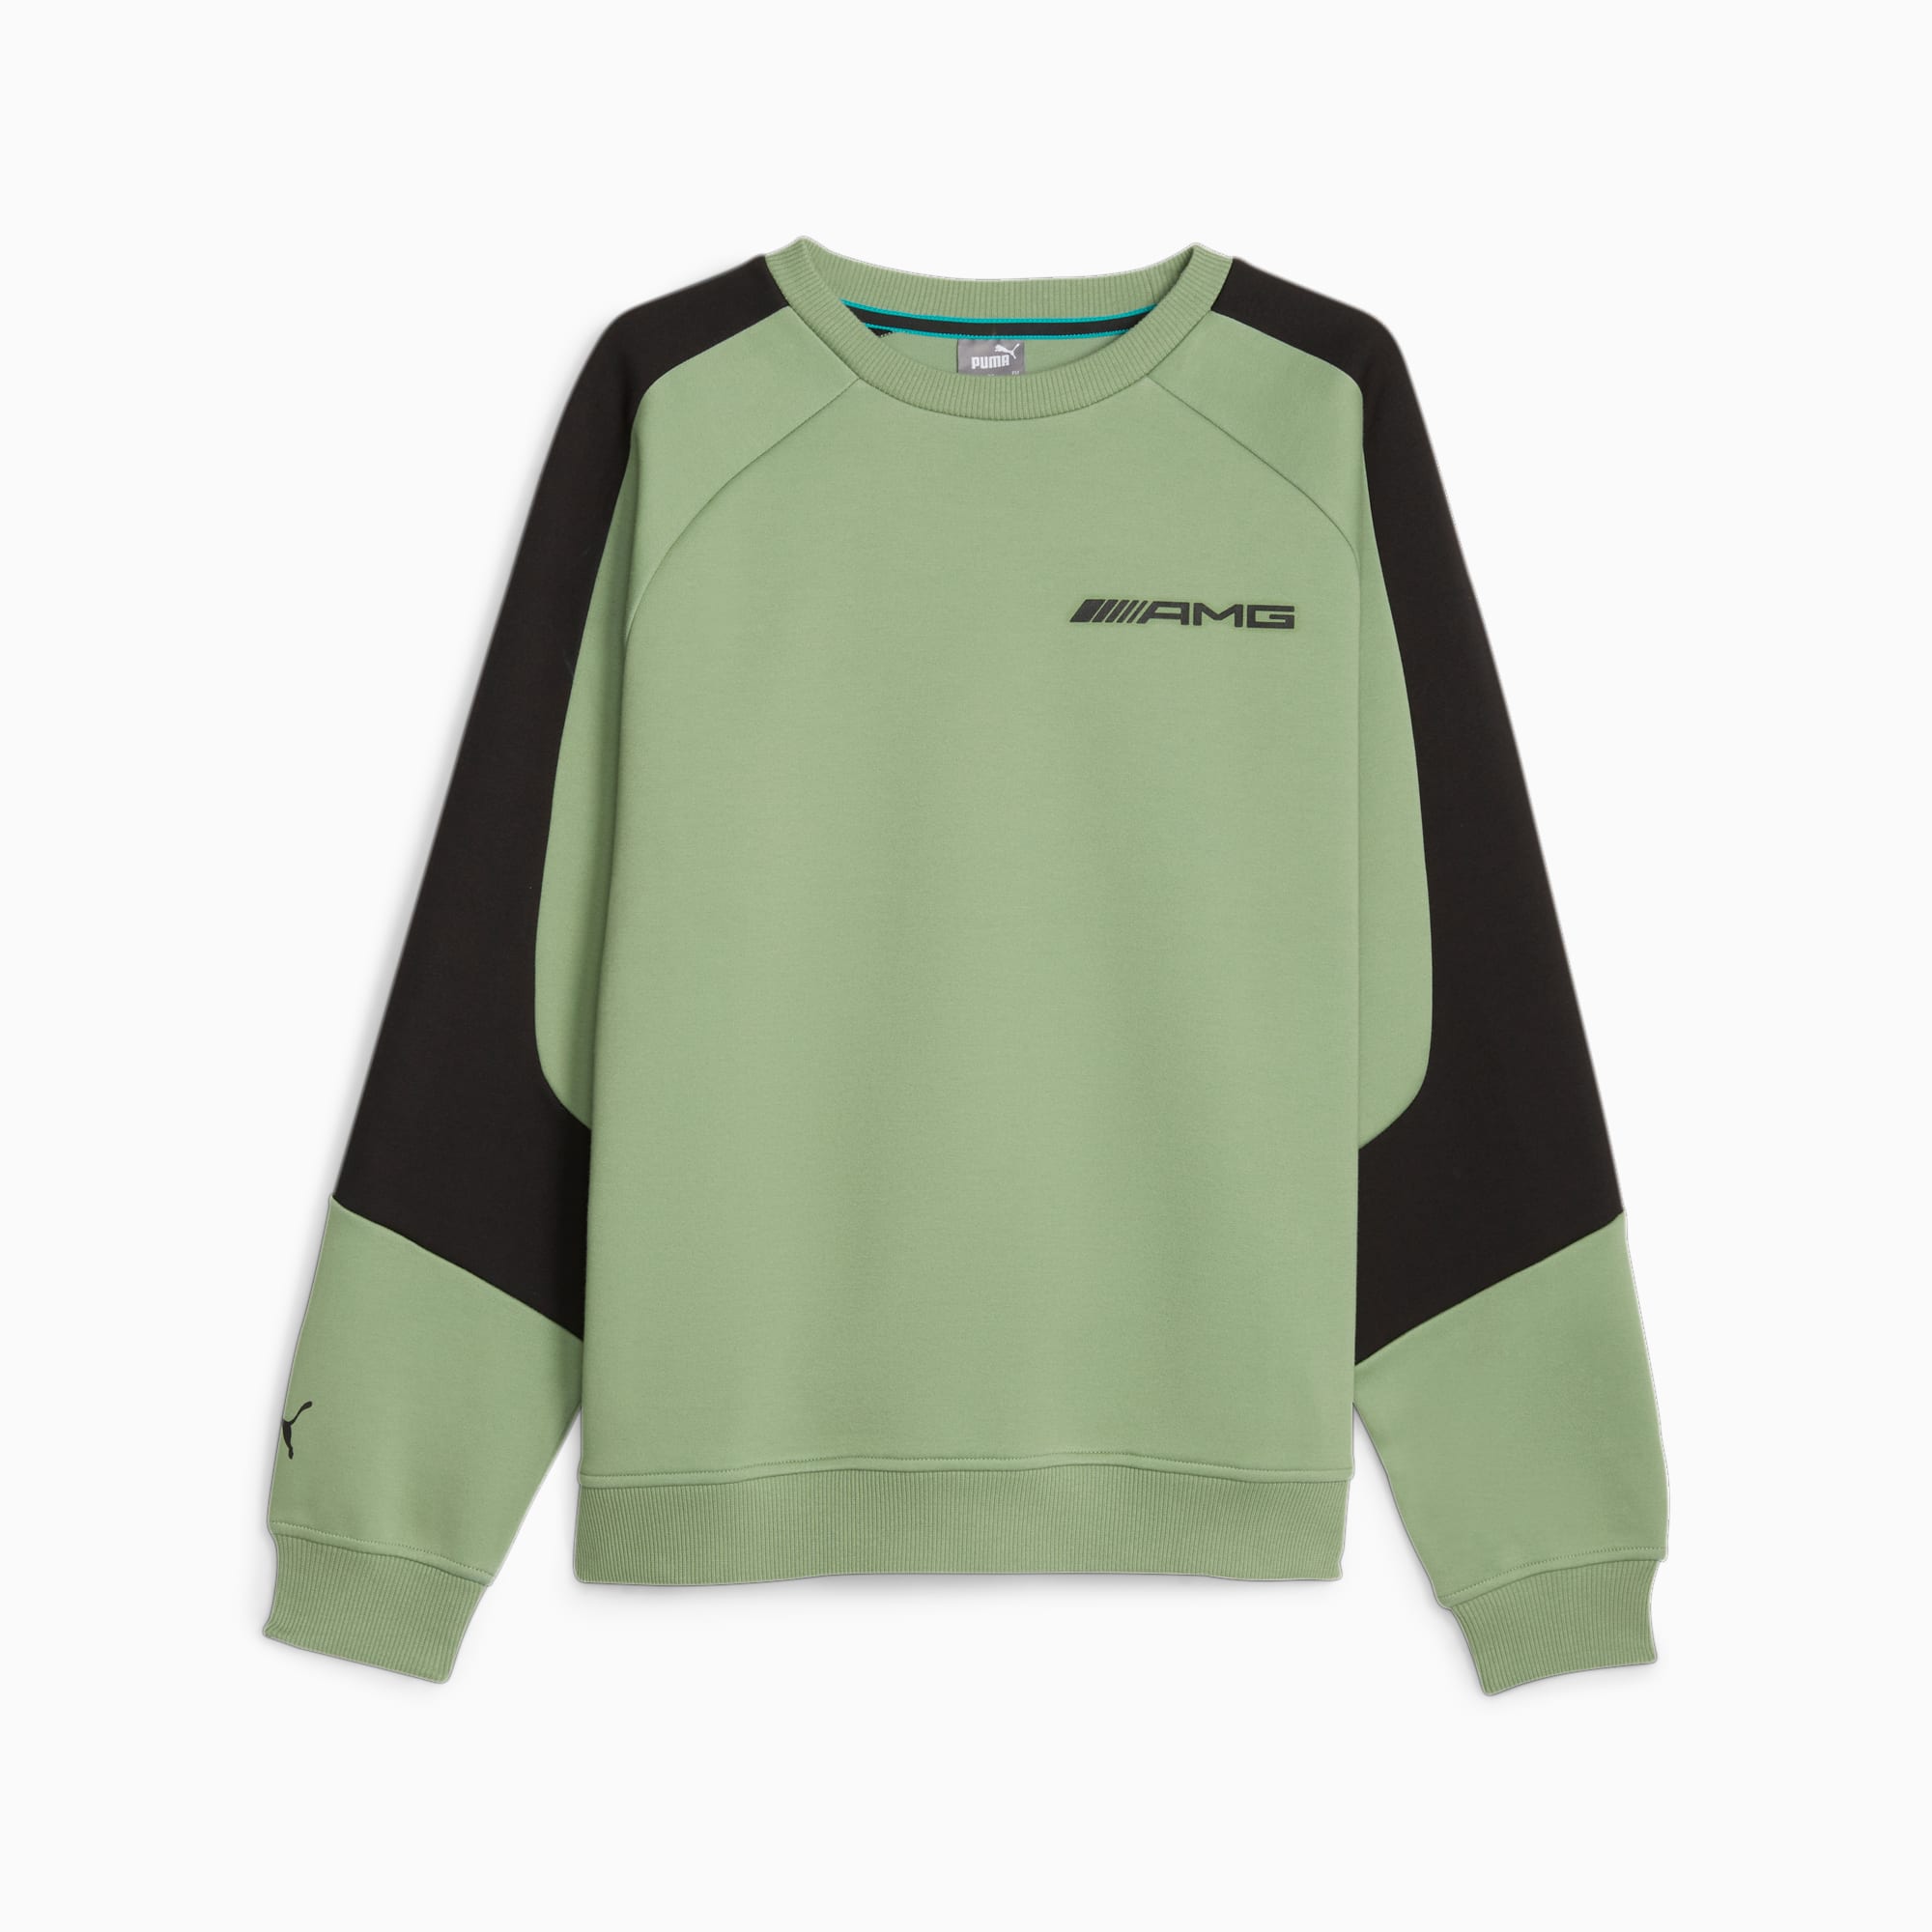 PUMA Mercedes-Amg Men's Sweatshirt, Dusty Green, Size XS, Clothing